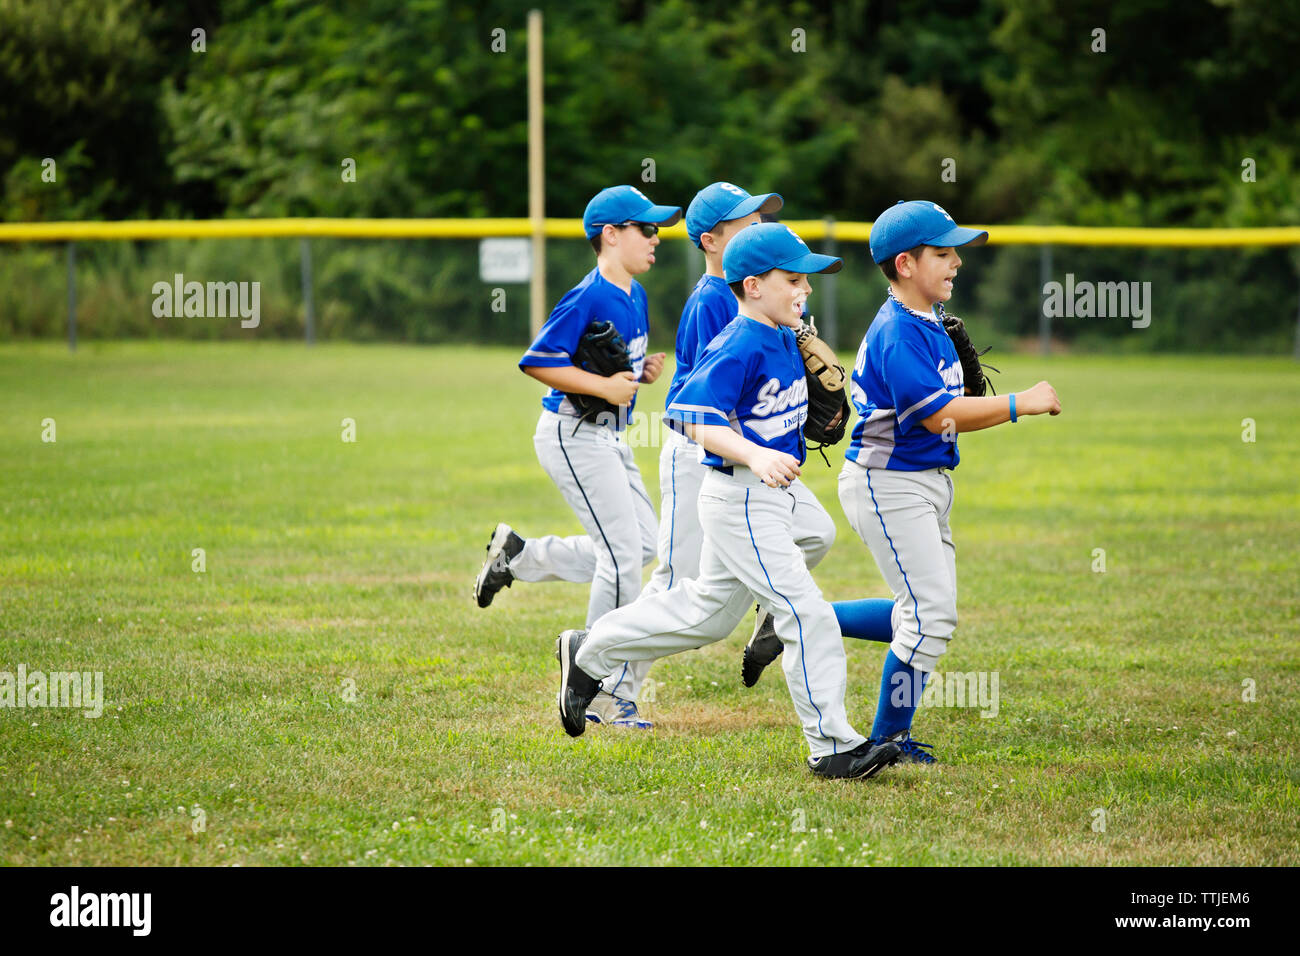 Los jugadores de béisbol girando sobre césped Foto de stock